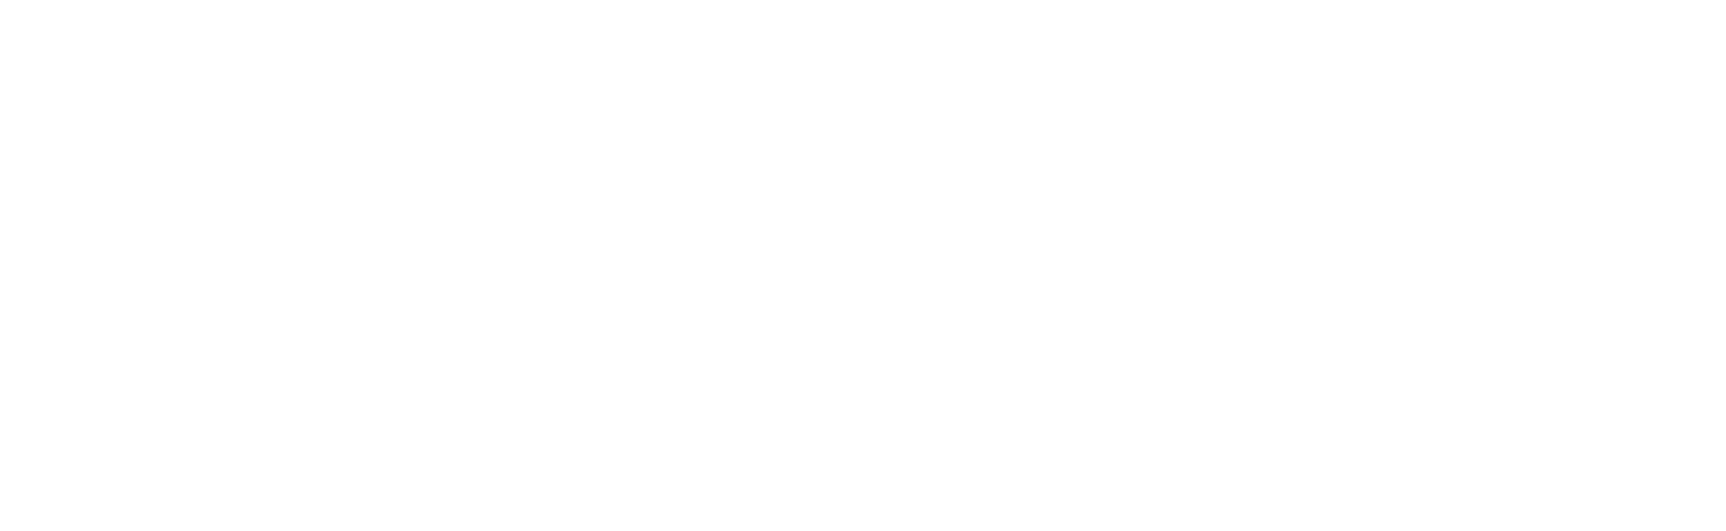 Cymasuite logo blanco